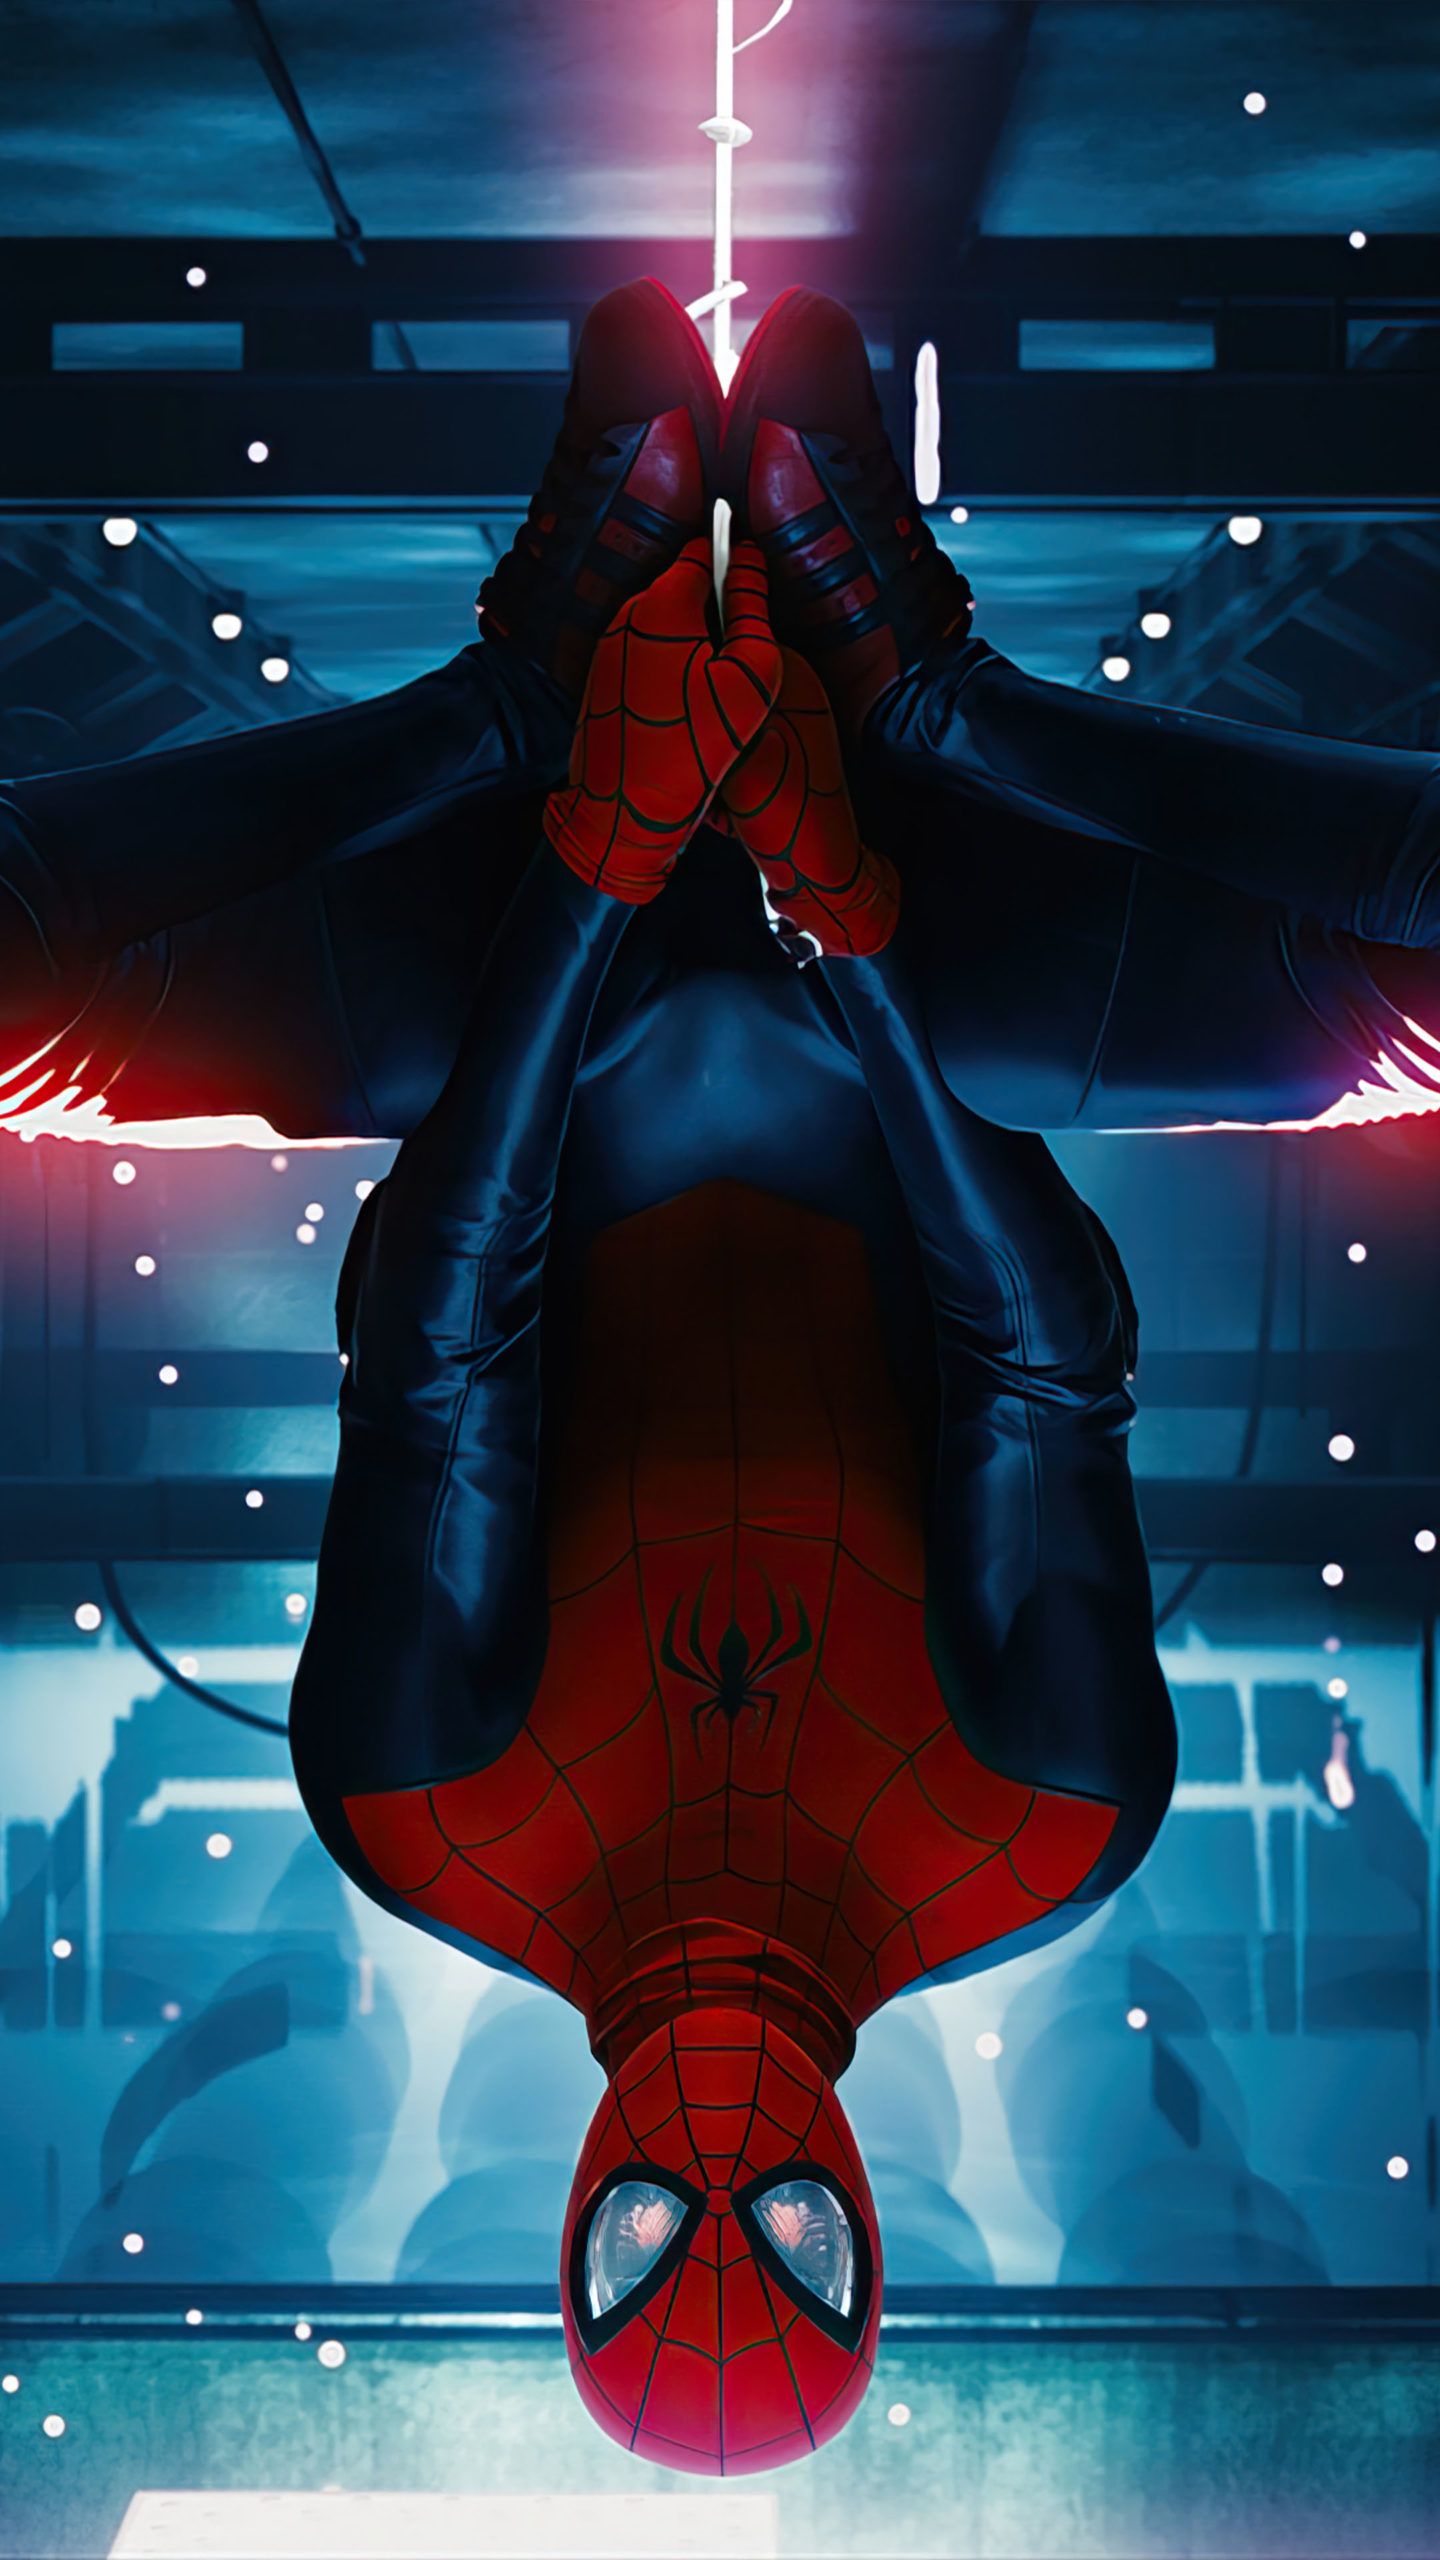 Spider Man Miles Morales Hanging Upside Down 4K Ultra HD Mobile Wallpaper